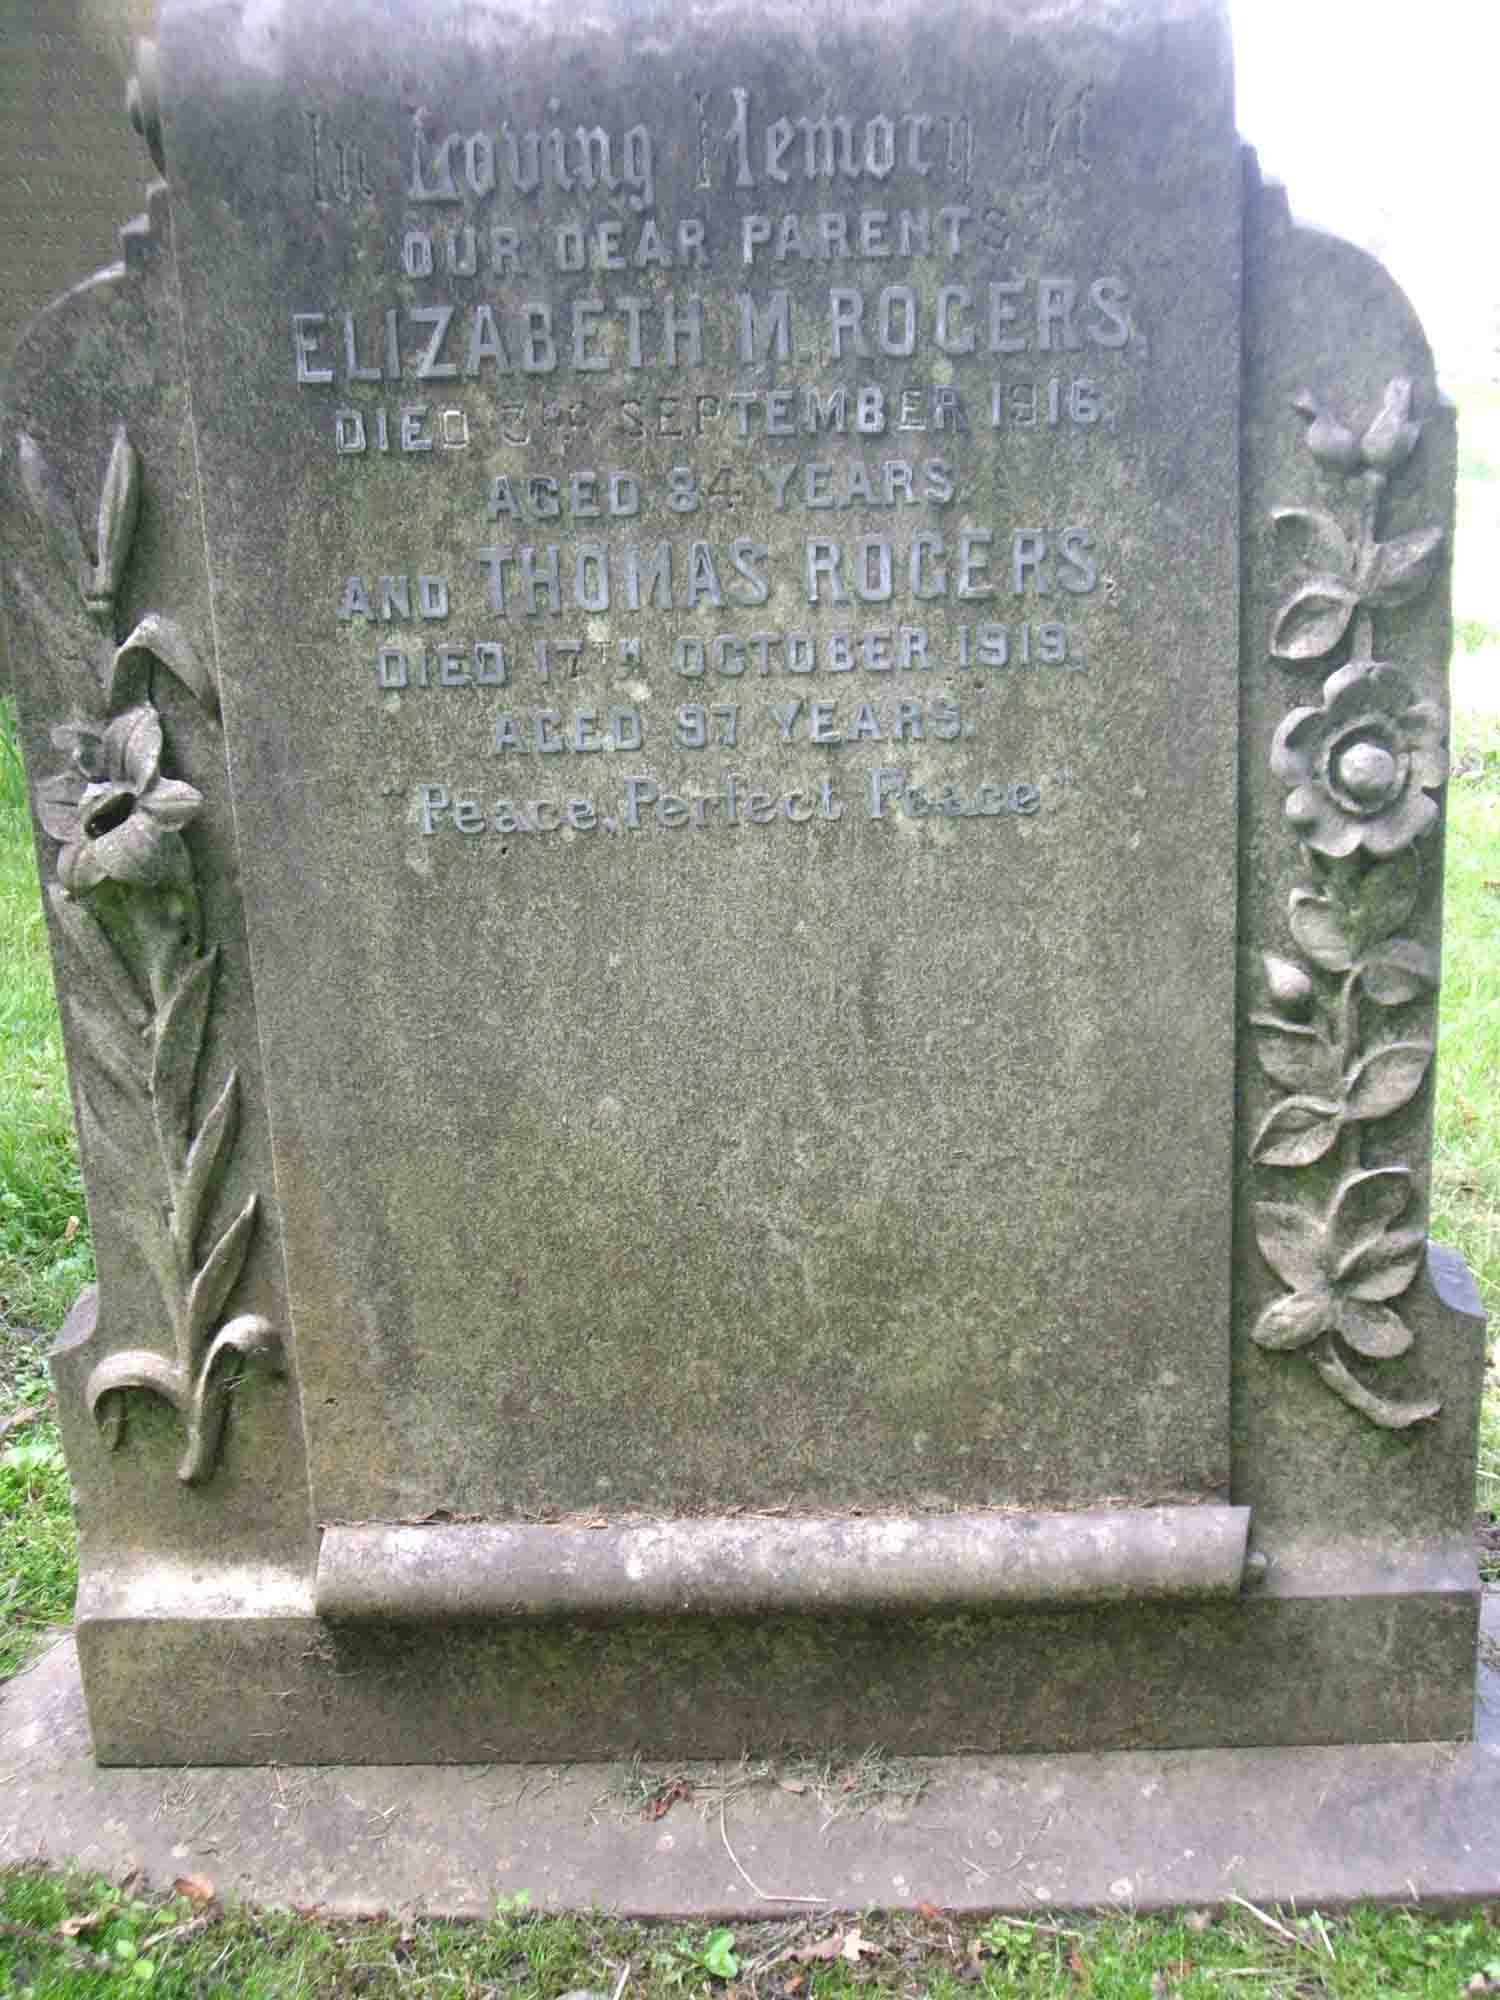 Rogers, Elizabeth M & Thomas (3 4)